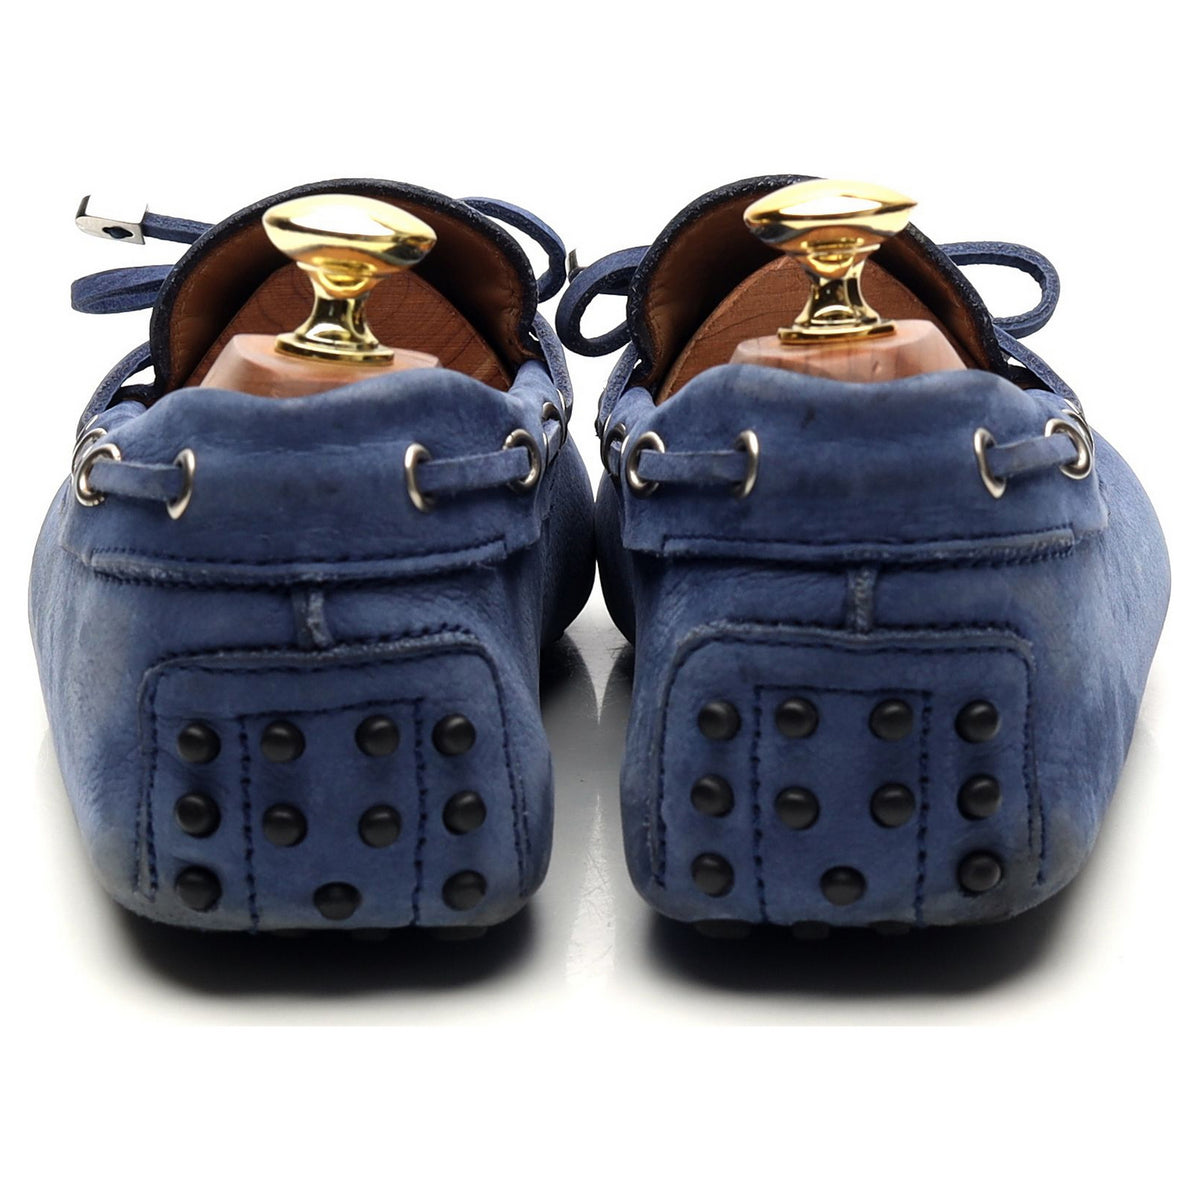 Gommino Blue Nubuck Driving Loafers UK 7